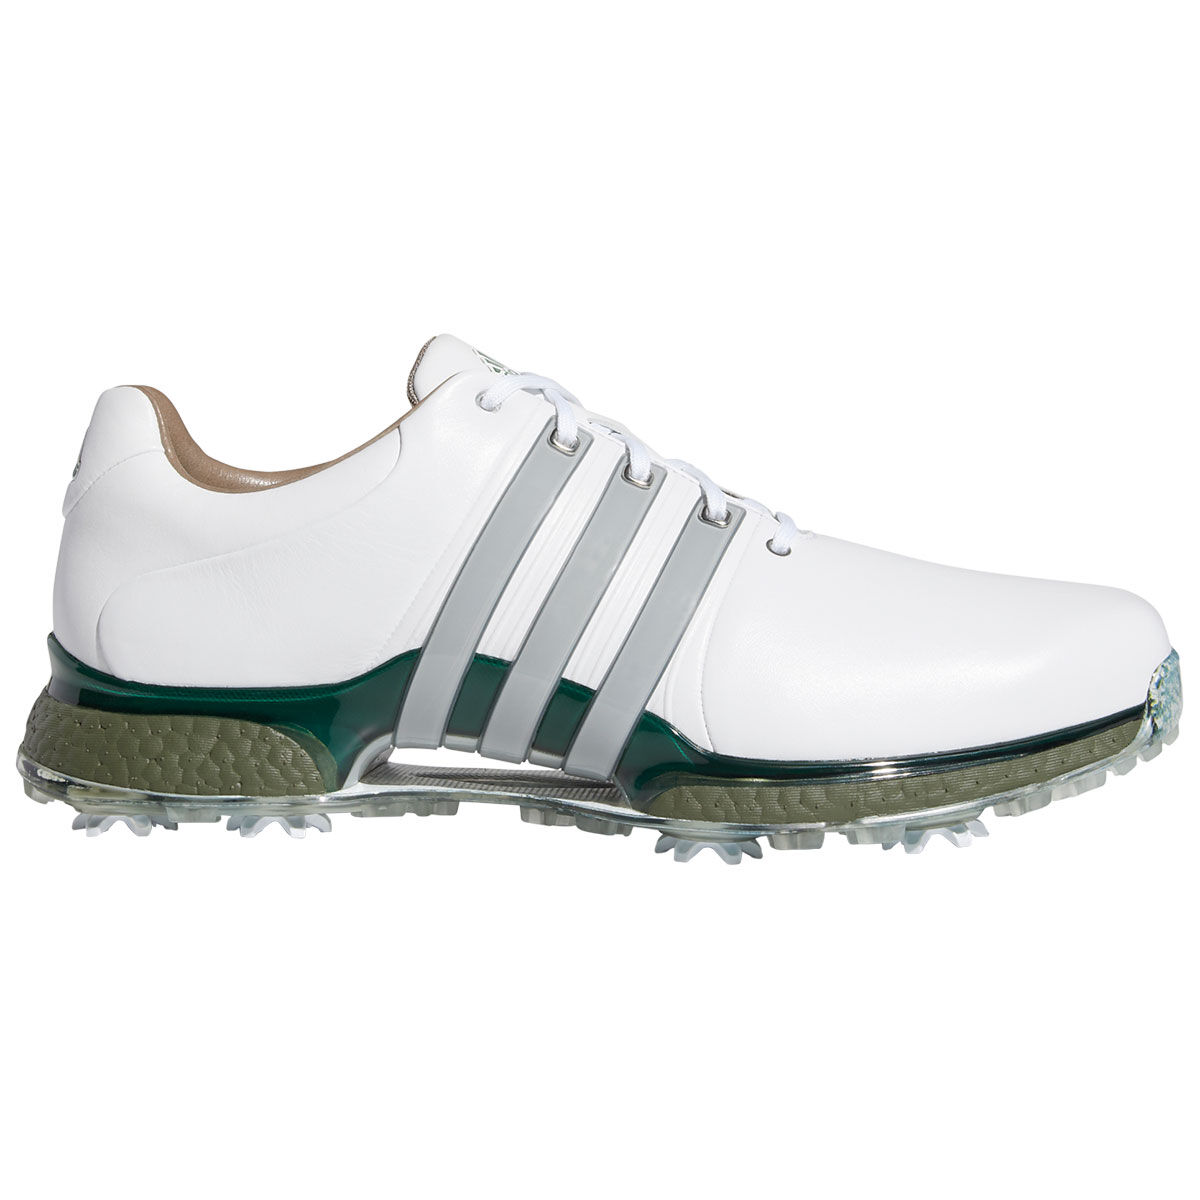 Scarpe adidas Golf Tour 360 XT Limited Edition | Online Golf